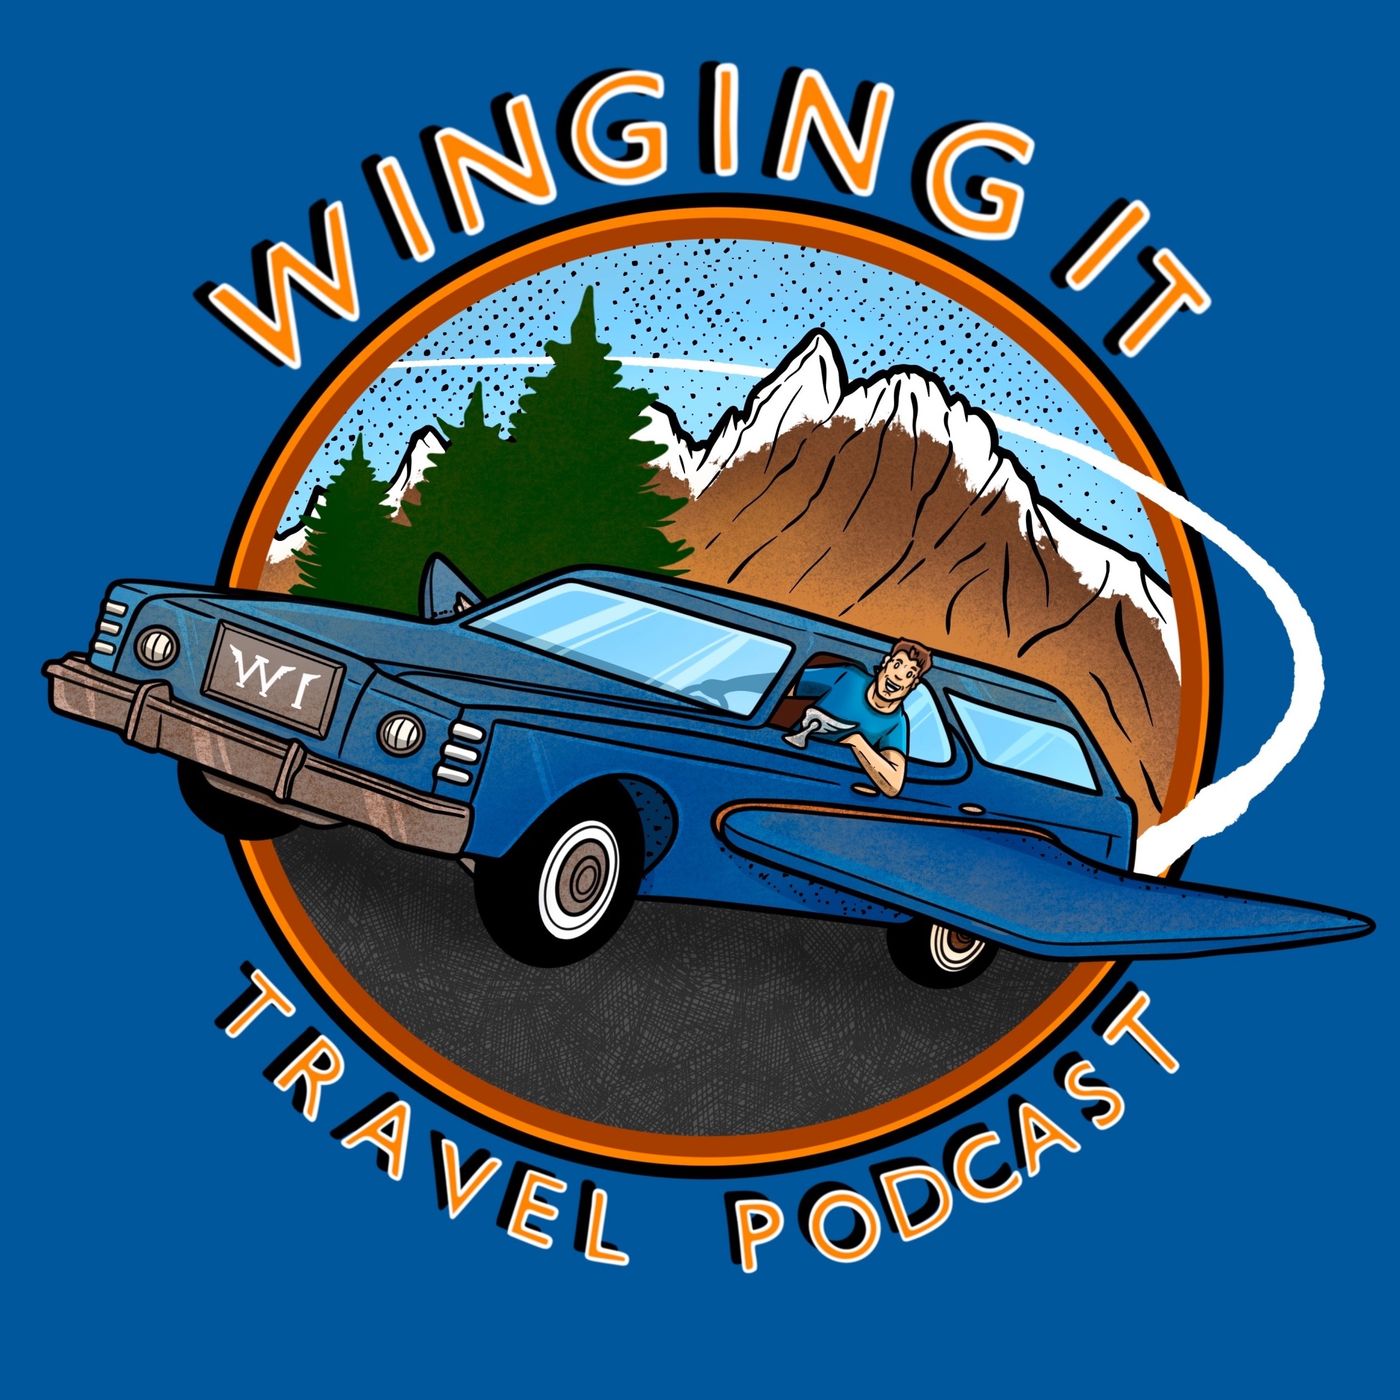 Winging It Travel Podcast